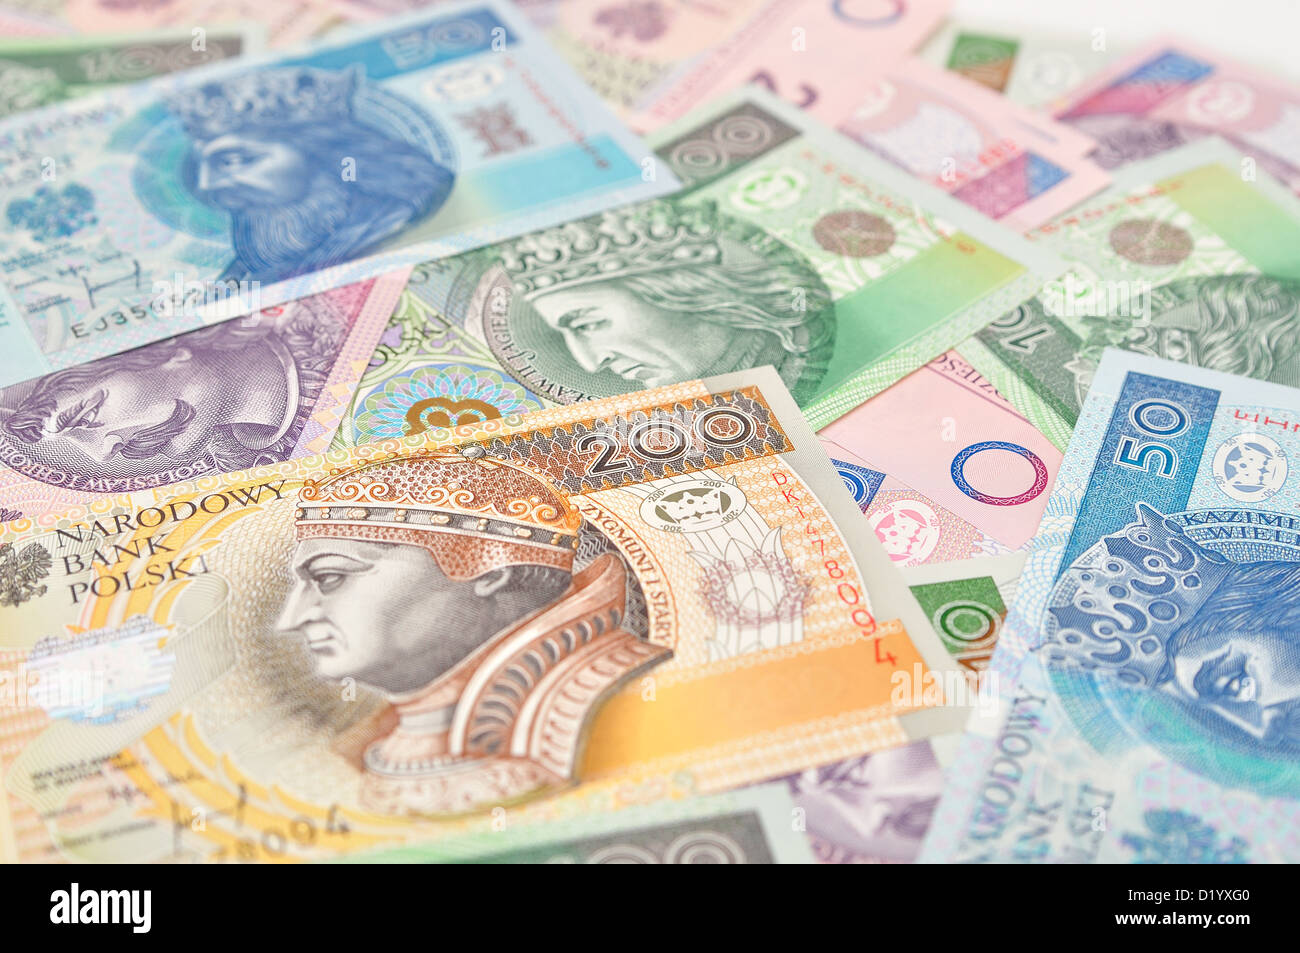 Polish paper money. Stock Photo